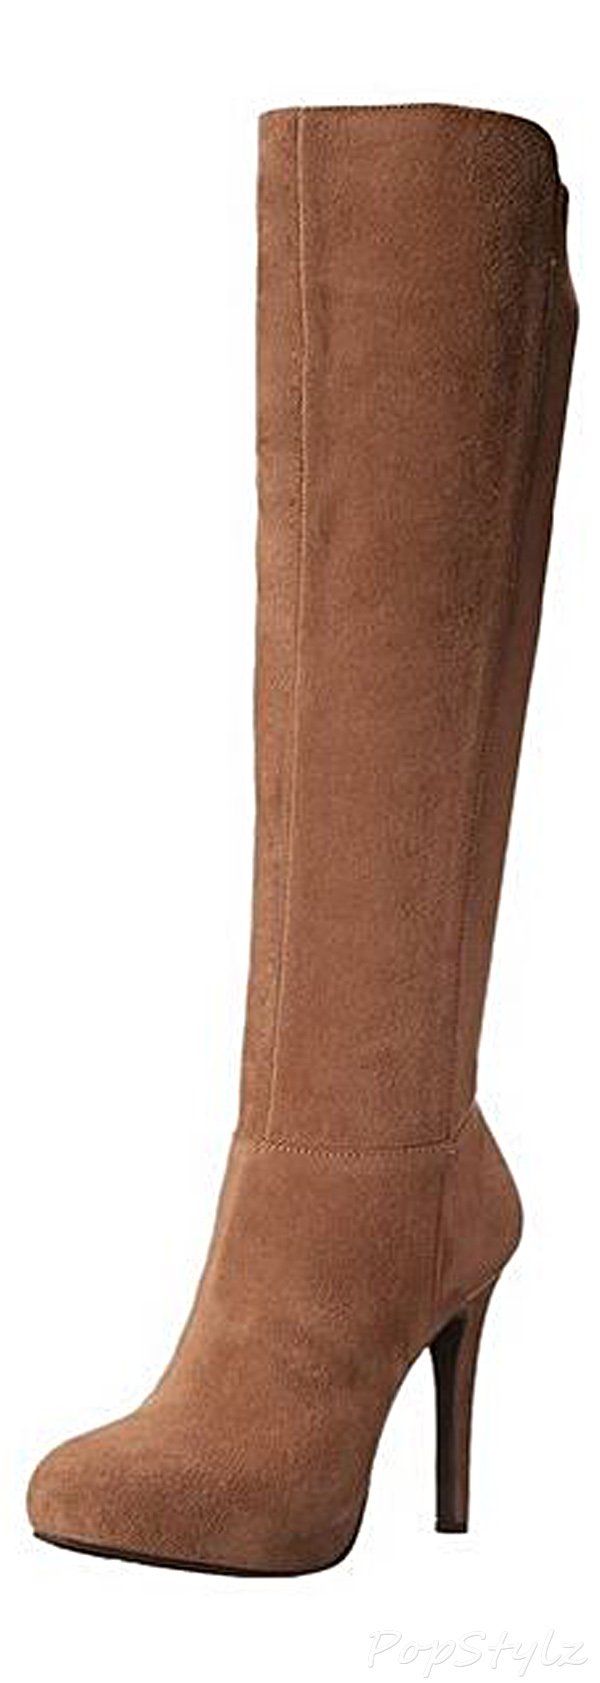 Jessica Simpson Avalona Leather Dress Boot